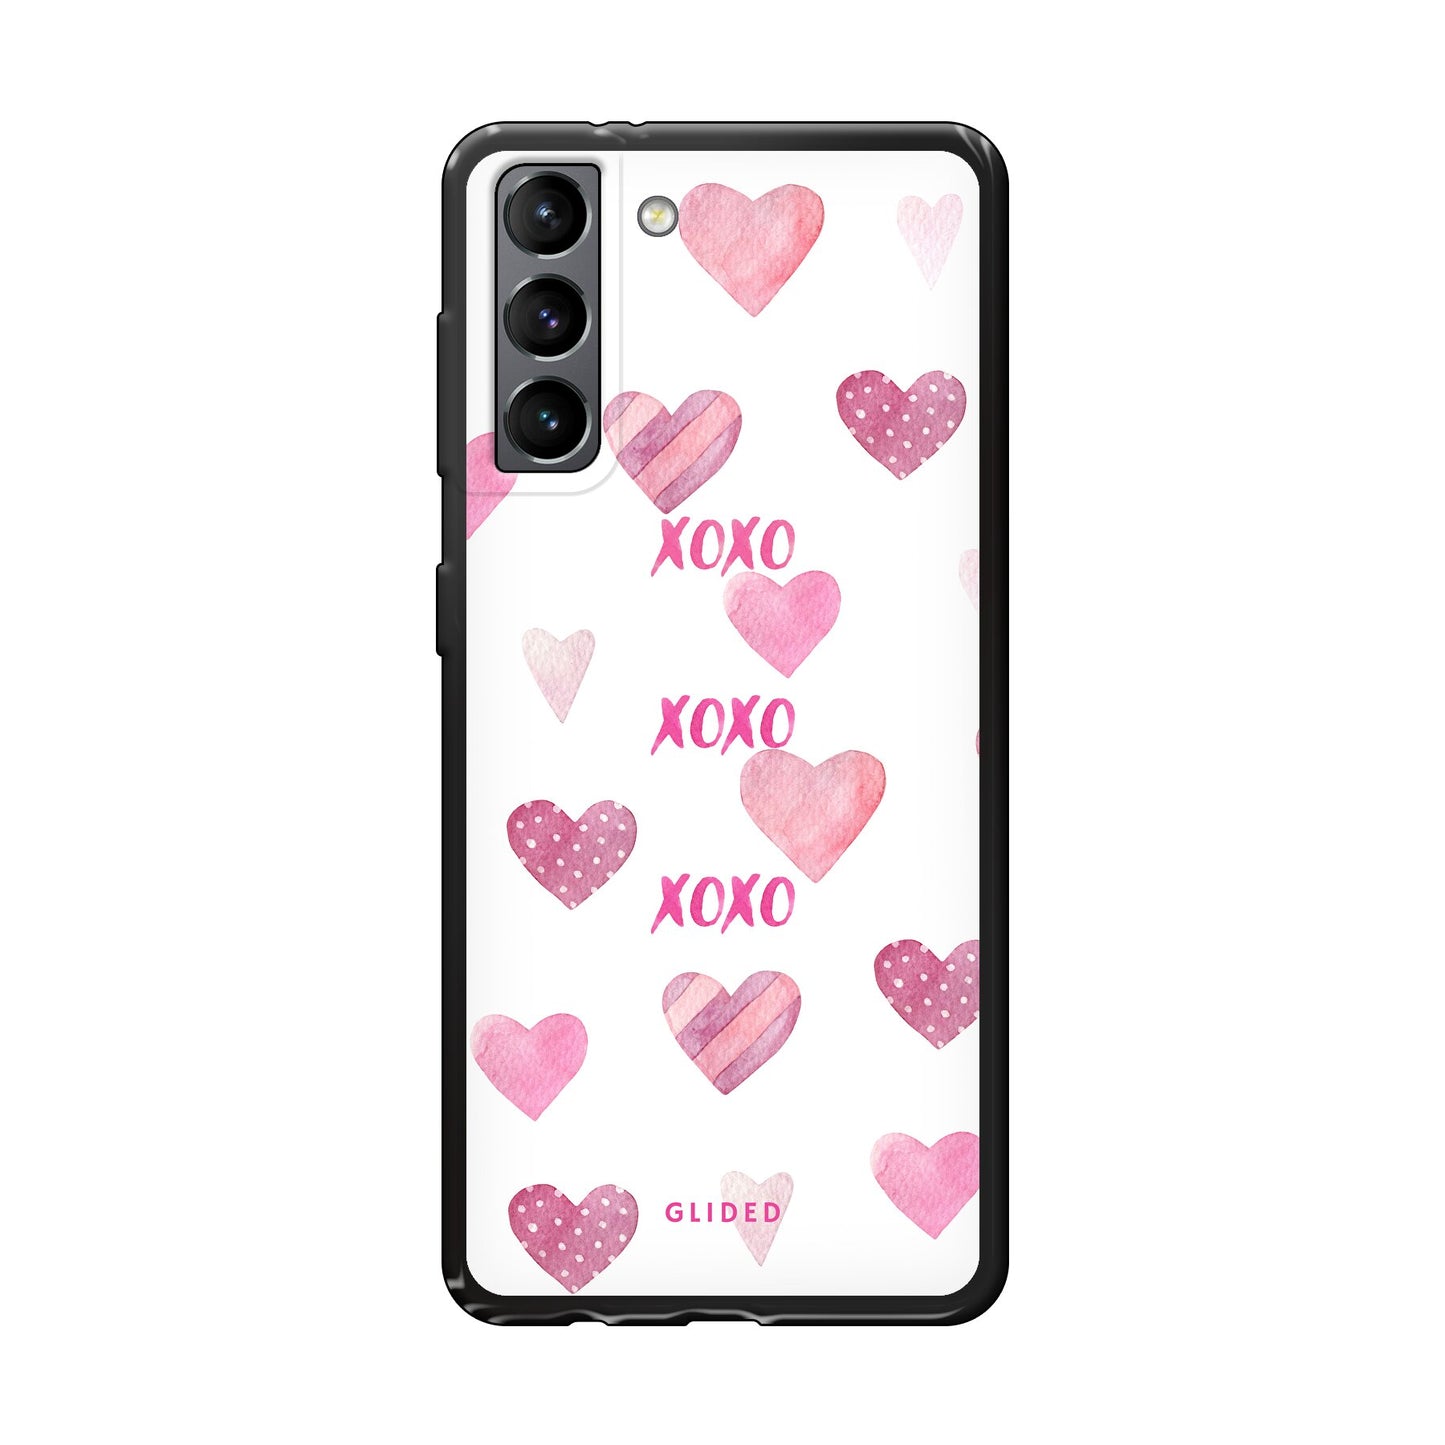 Xoxo - Samsung Galaxy S21 5G - Soft case